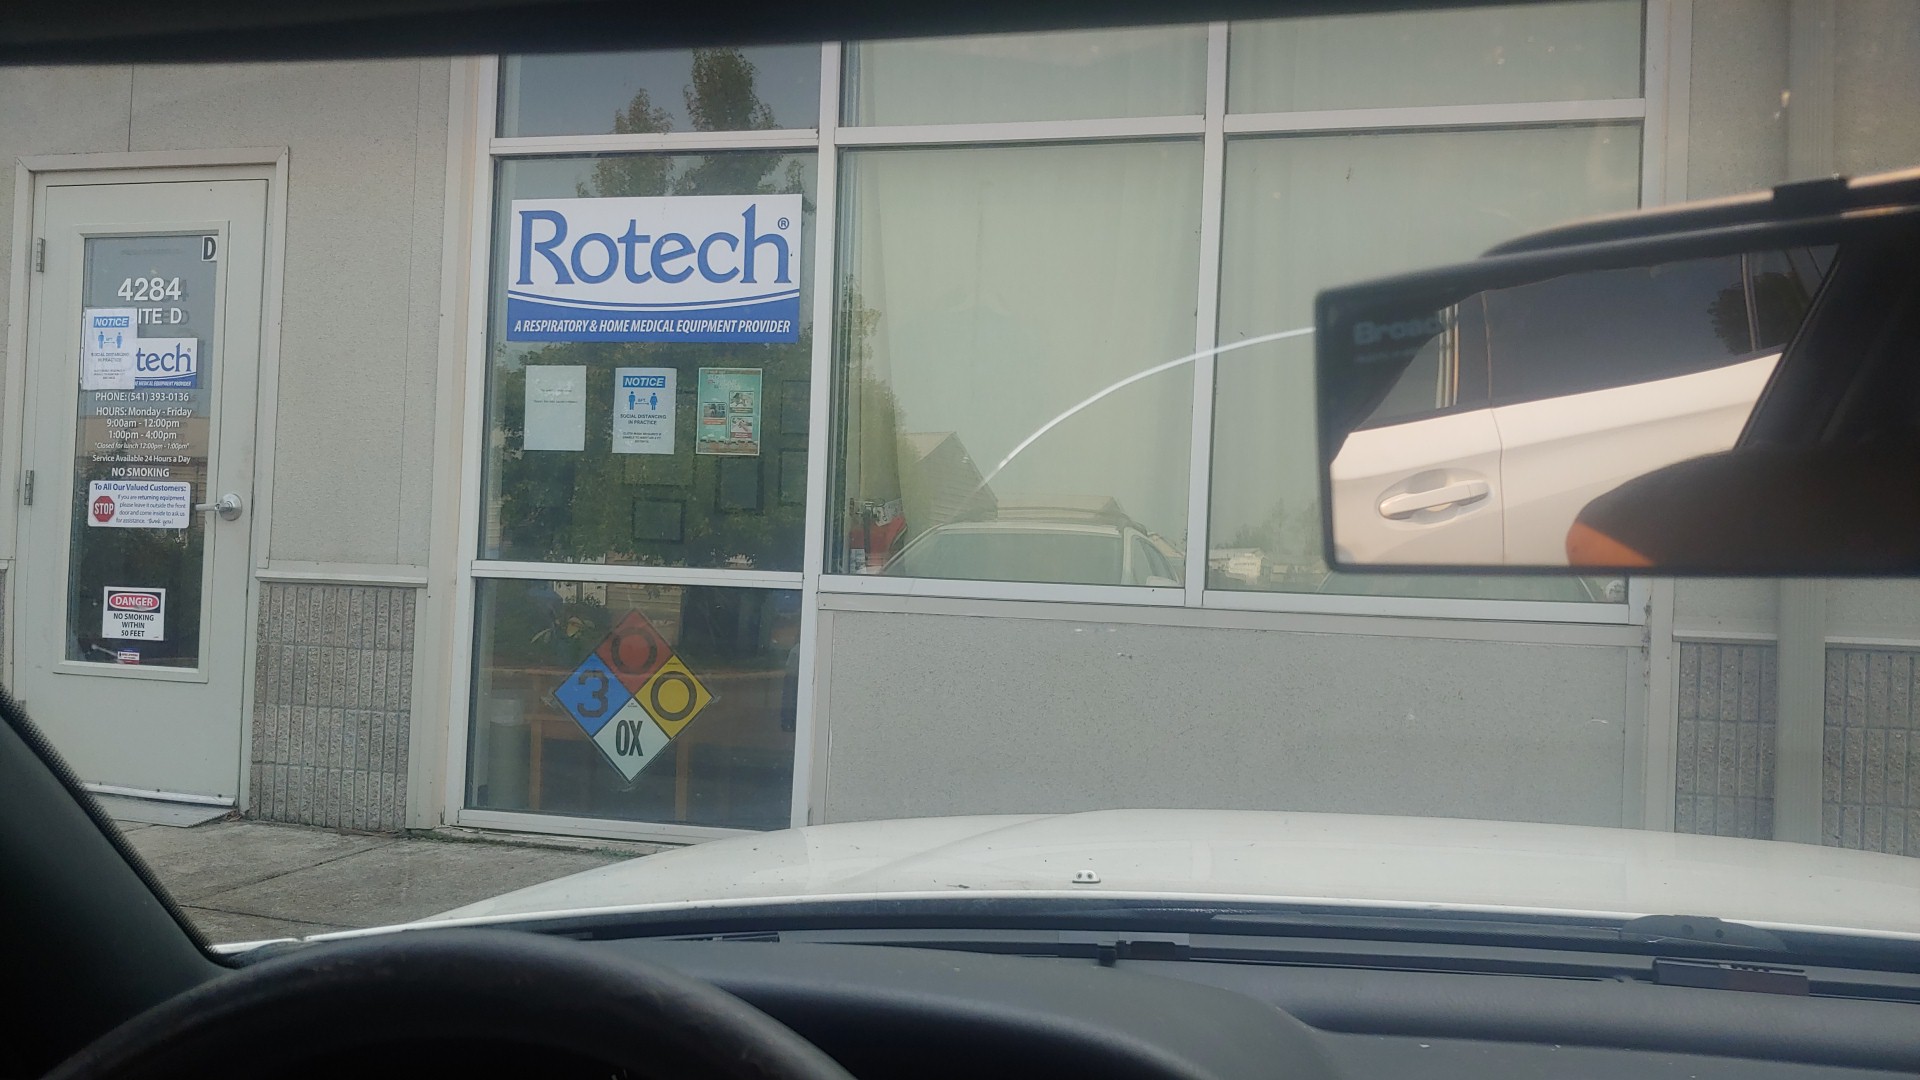 Rotech Healthcare Inc.